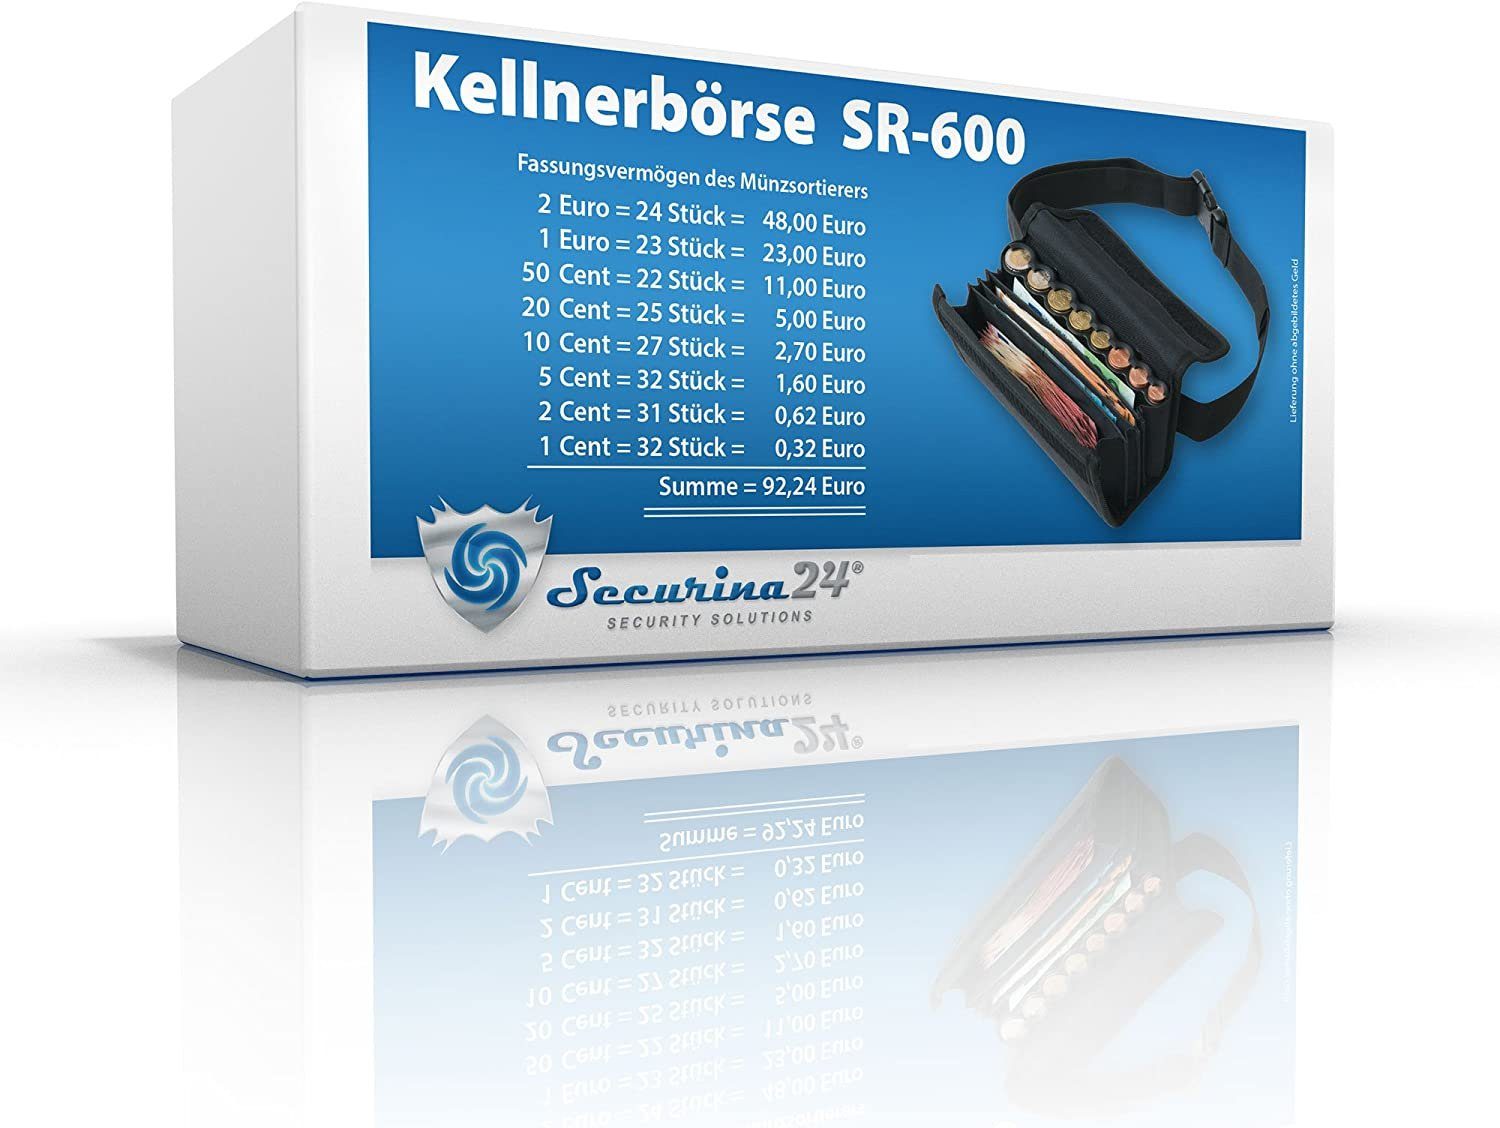 Kellnertasche mit Kellnerbörse Münzspender SR-600 Securina24